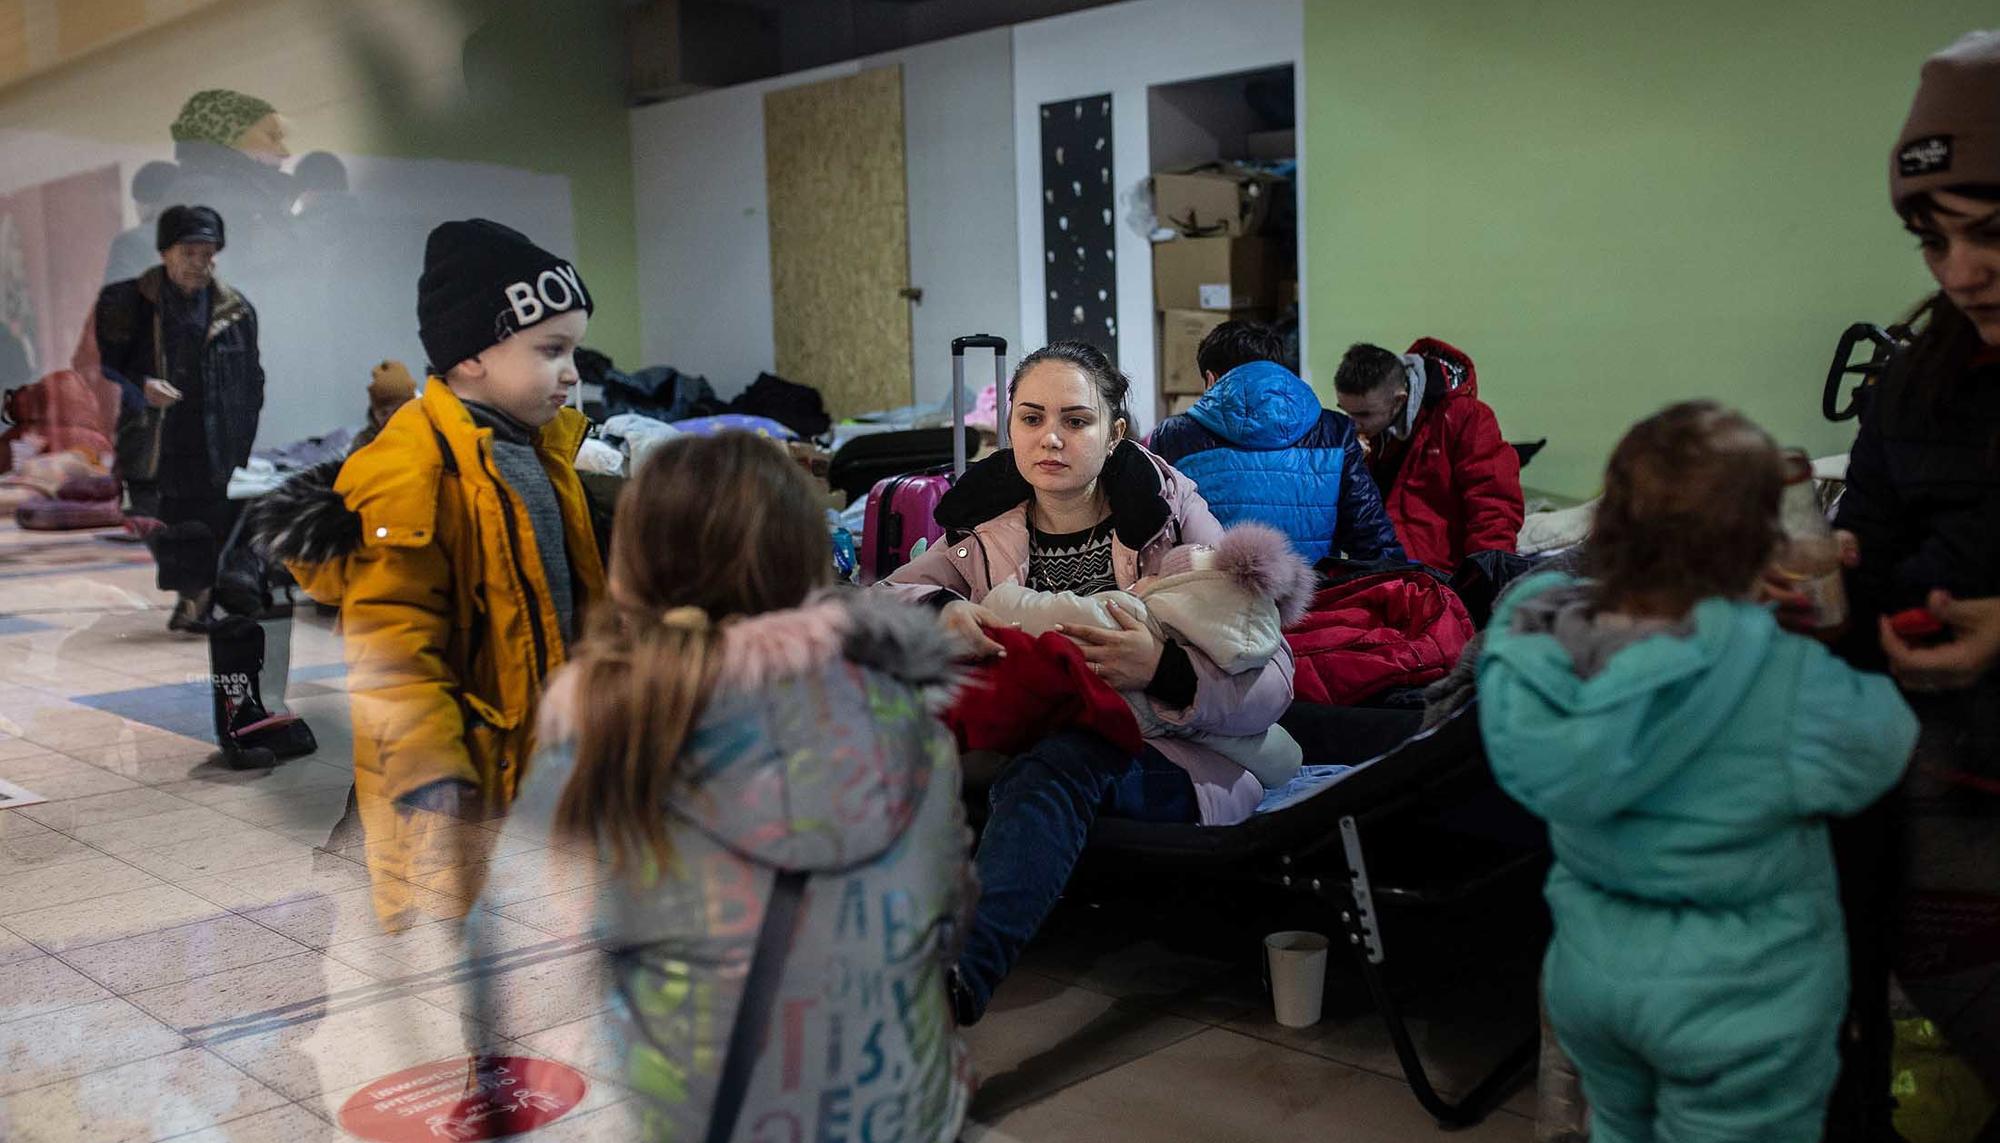 Ucranianos refugiados en Tesco - 7